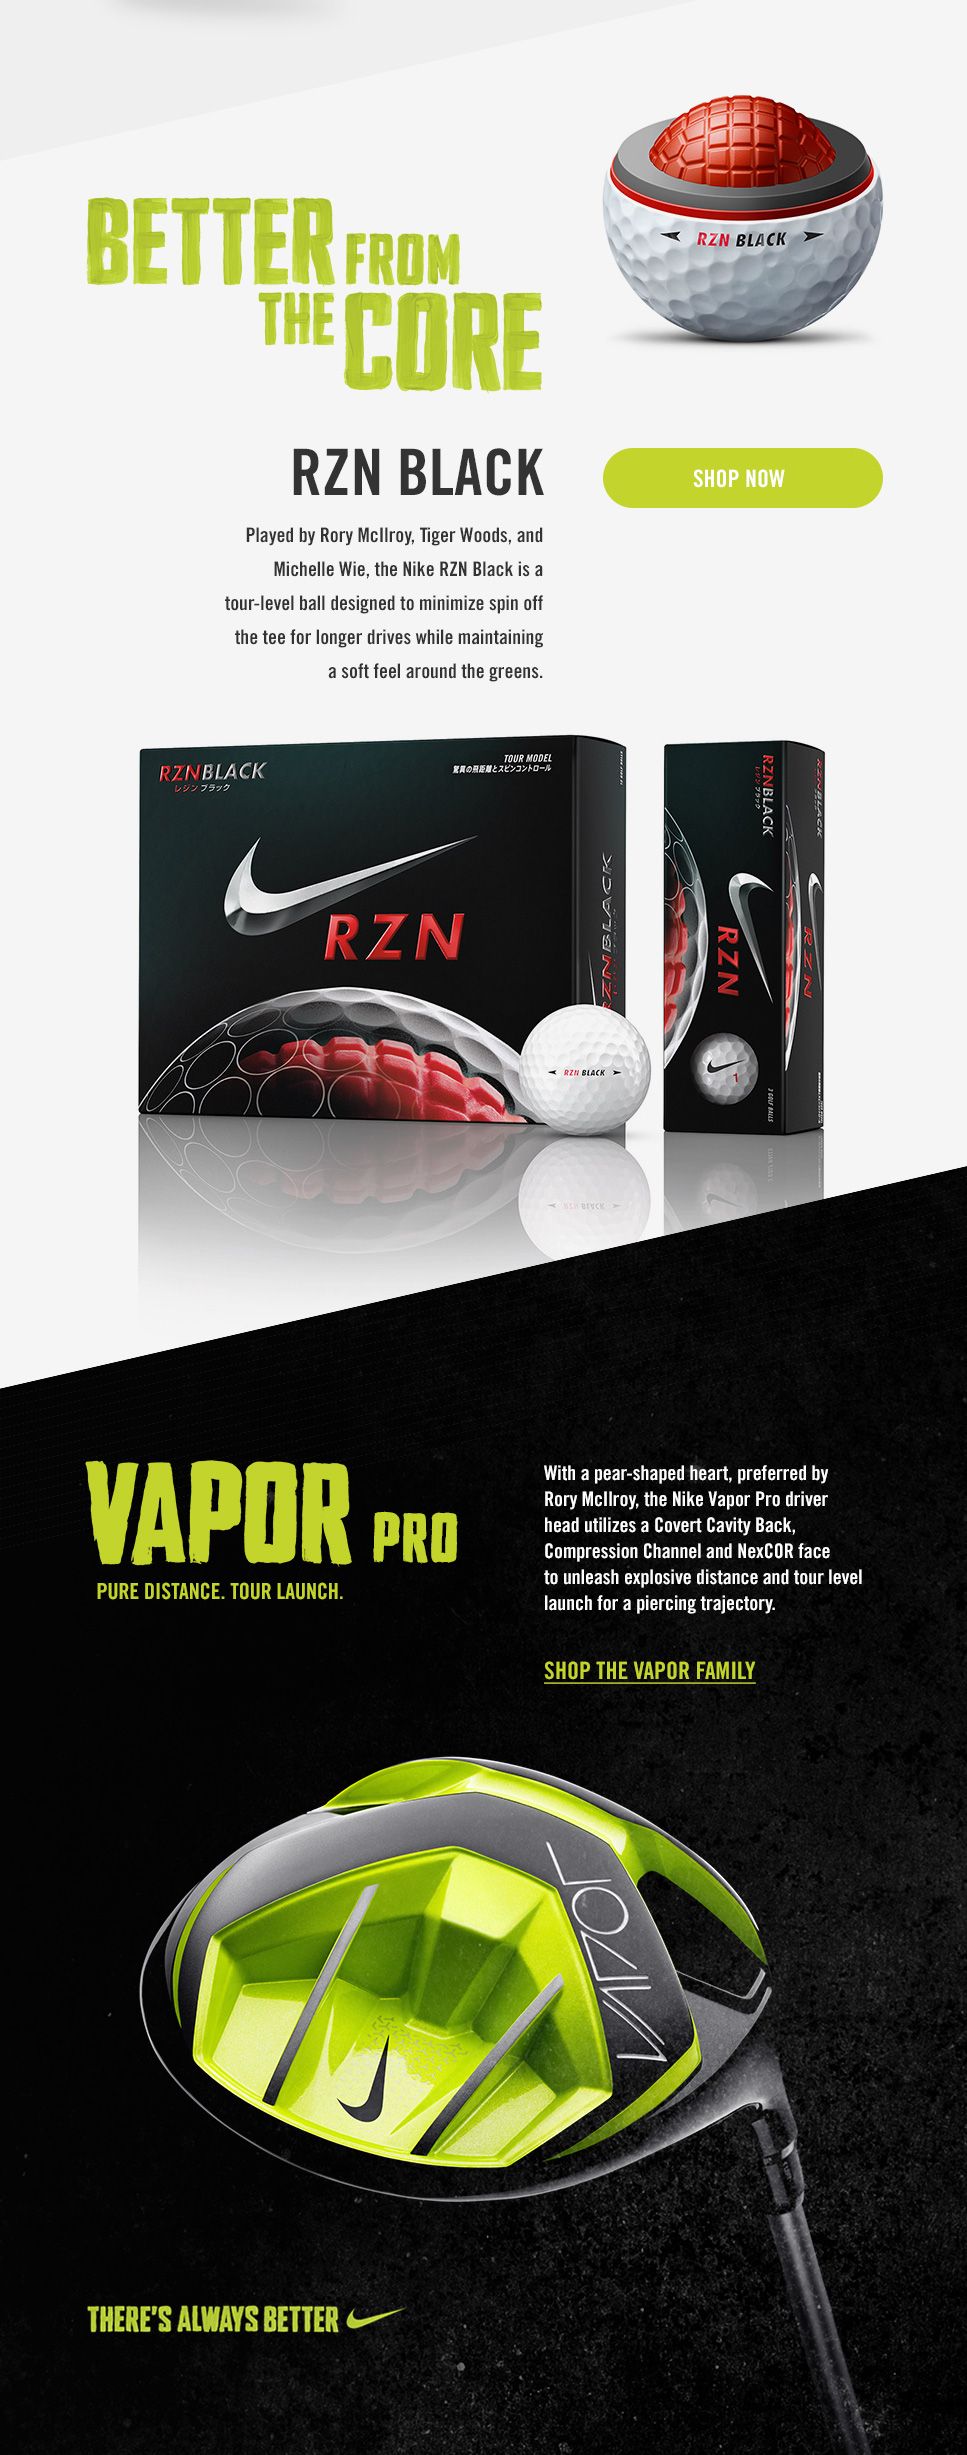 Nike RZN Black Golf Balls & Vapor Metalwoods